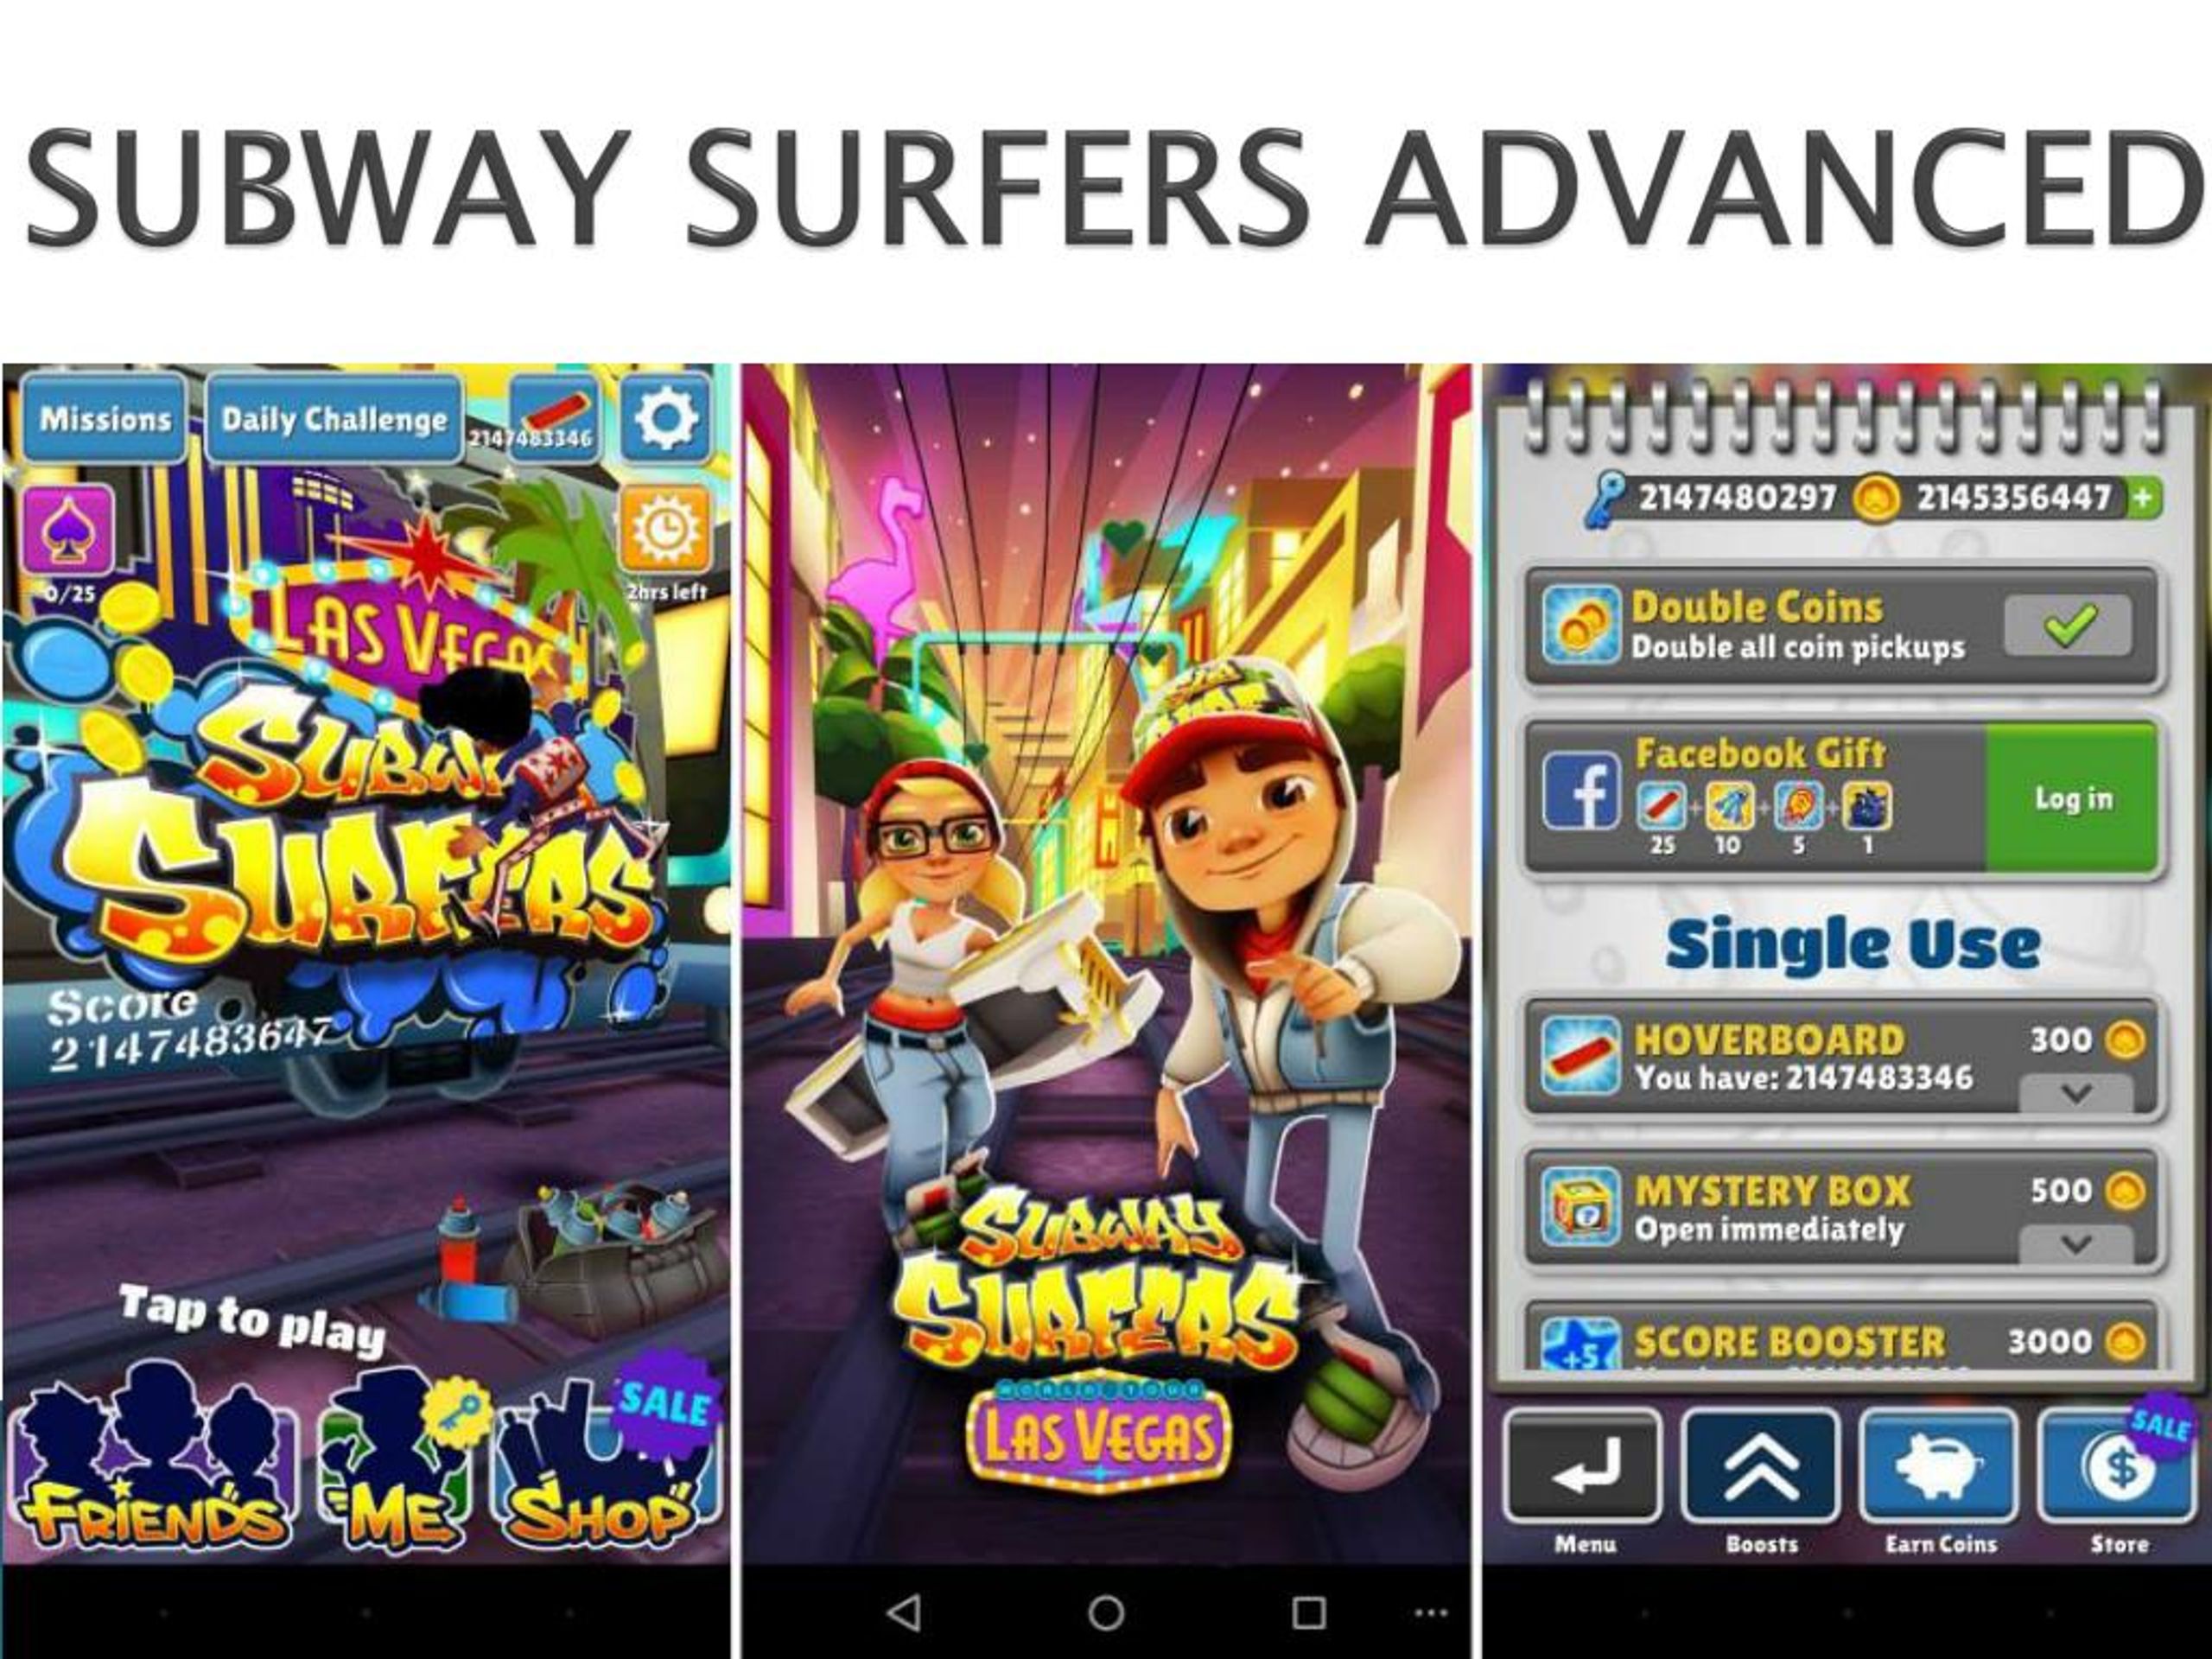 10 Subway surfers download ideas  subway surfers download, subway surfers,  subway